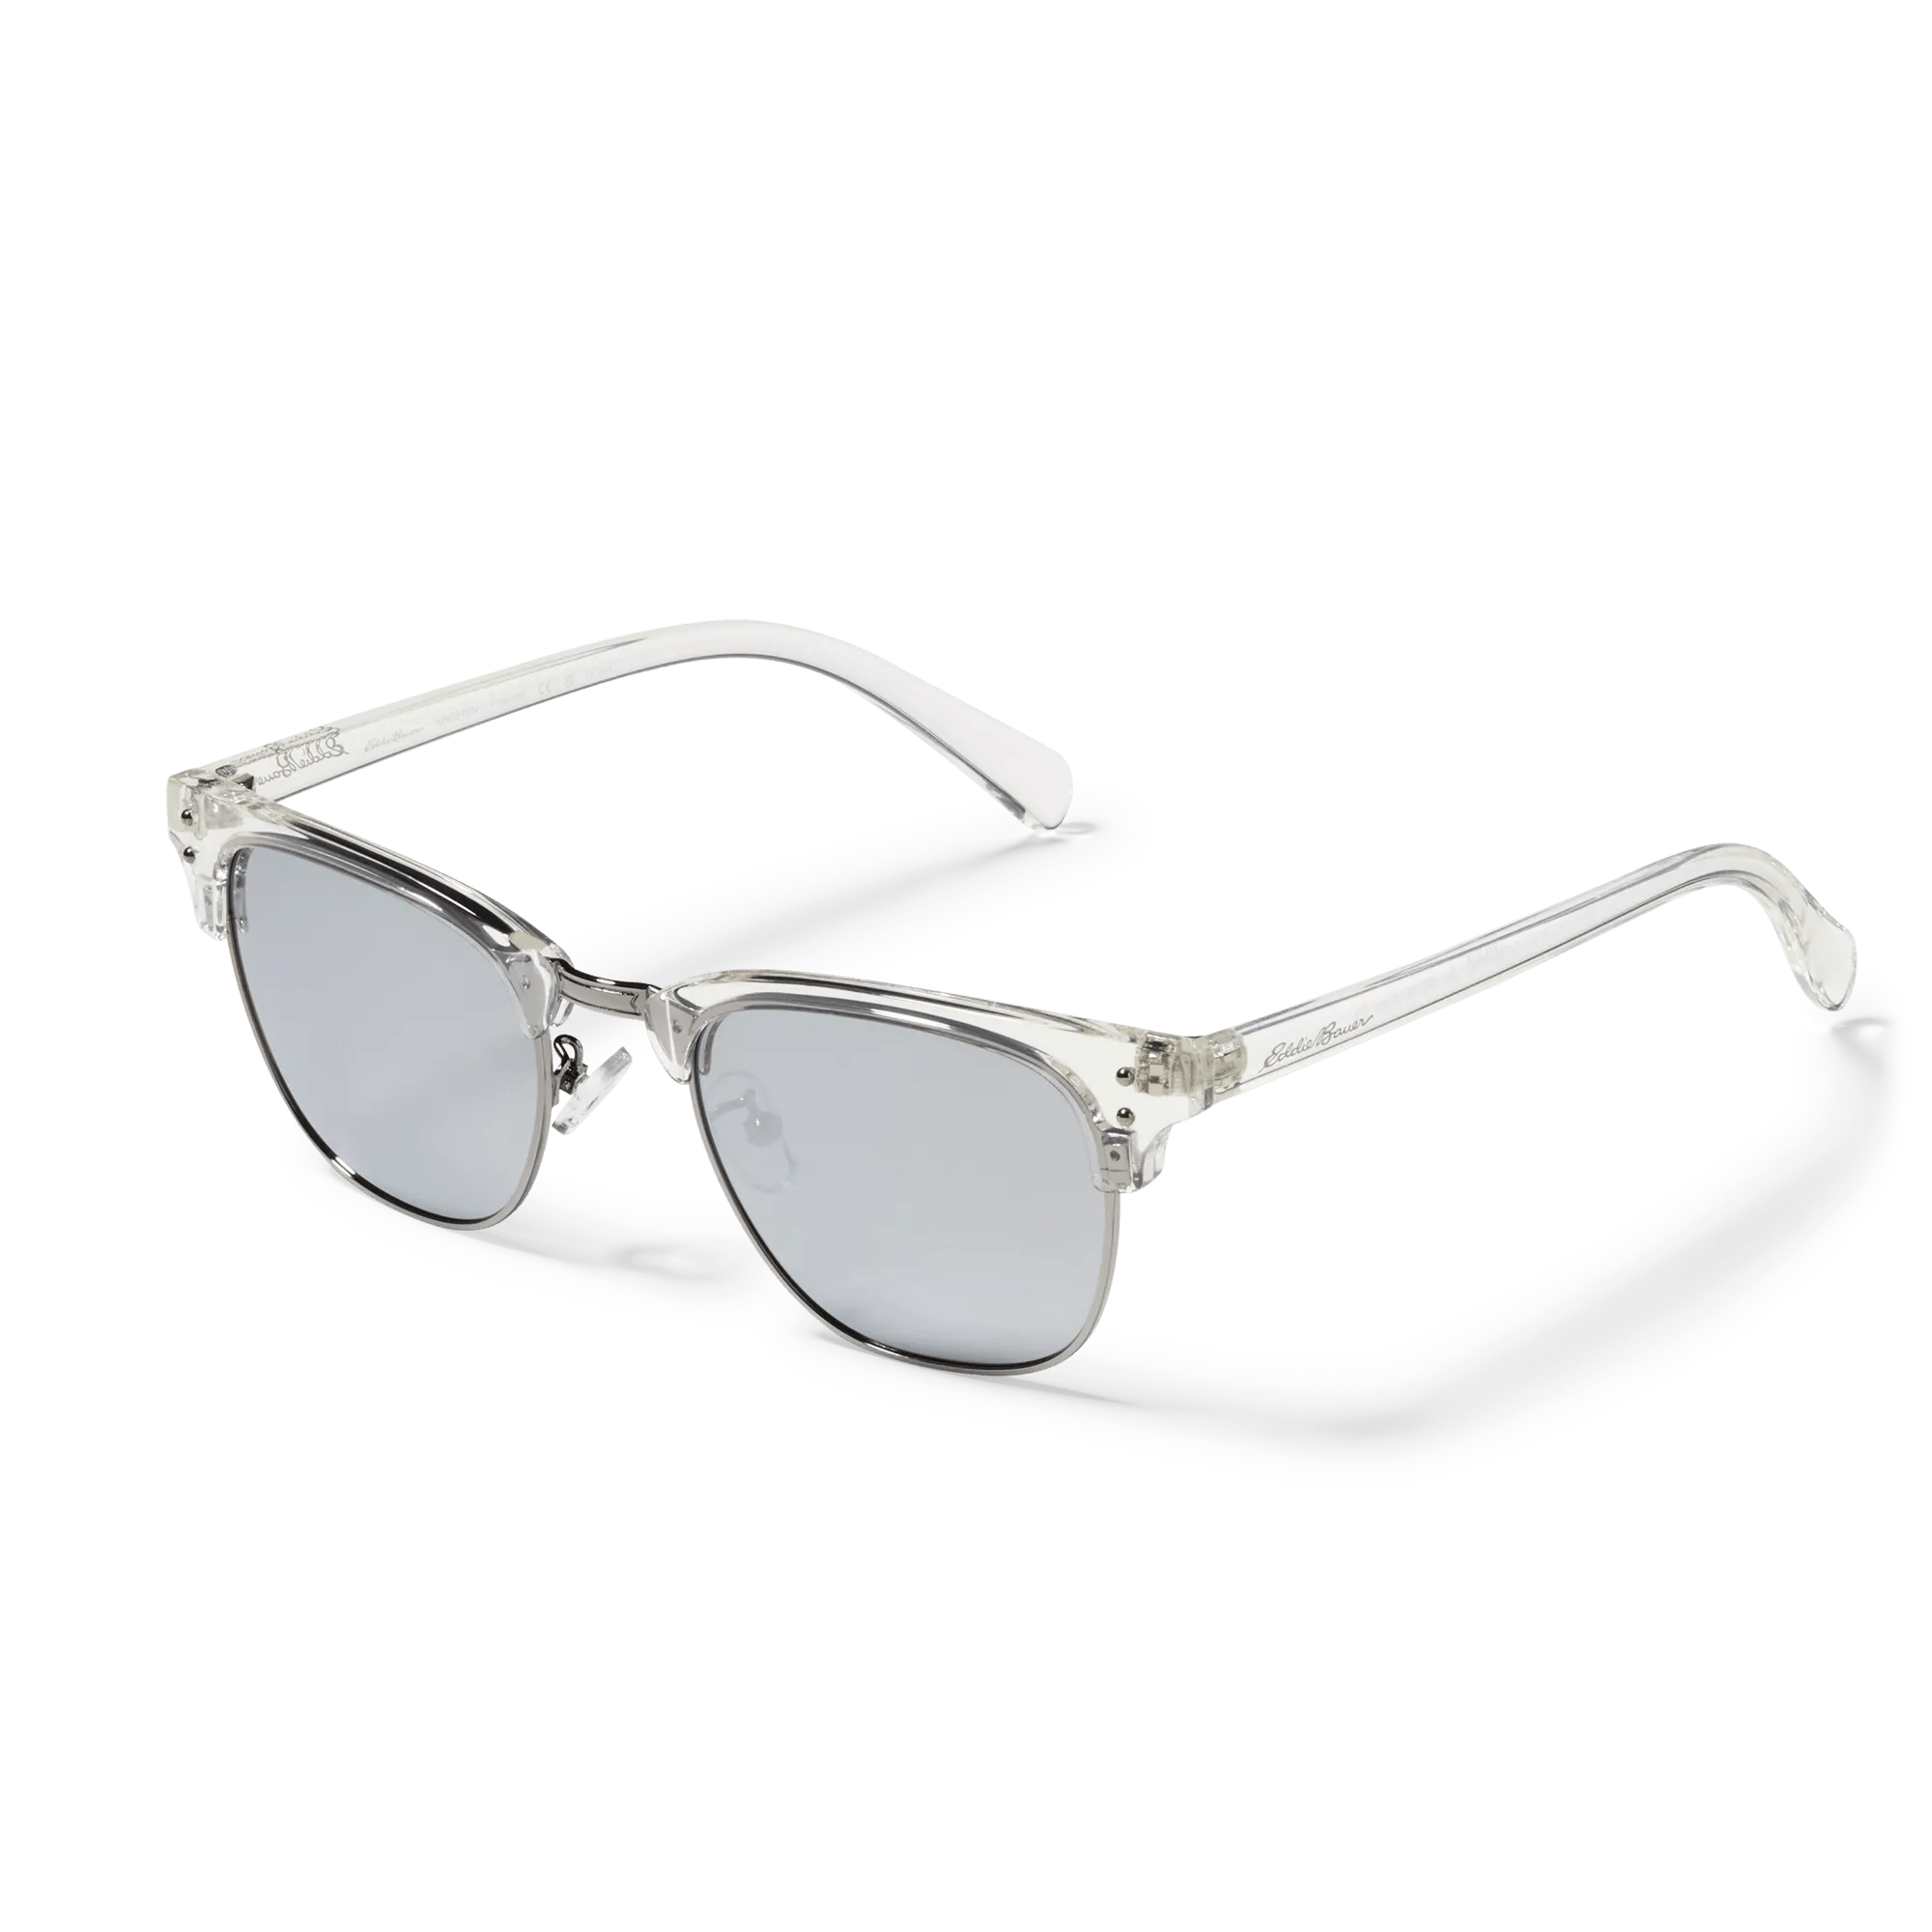 Kingston Polarized Sunglasses